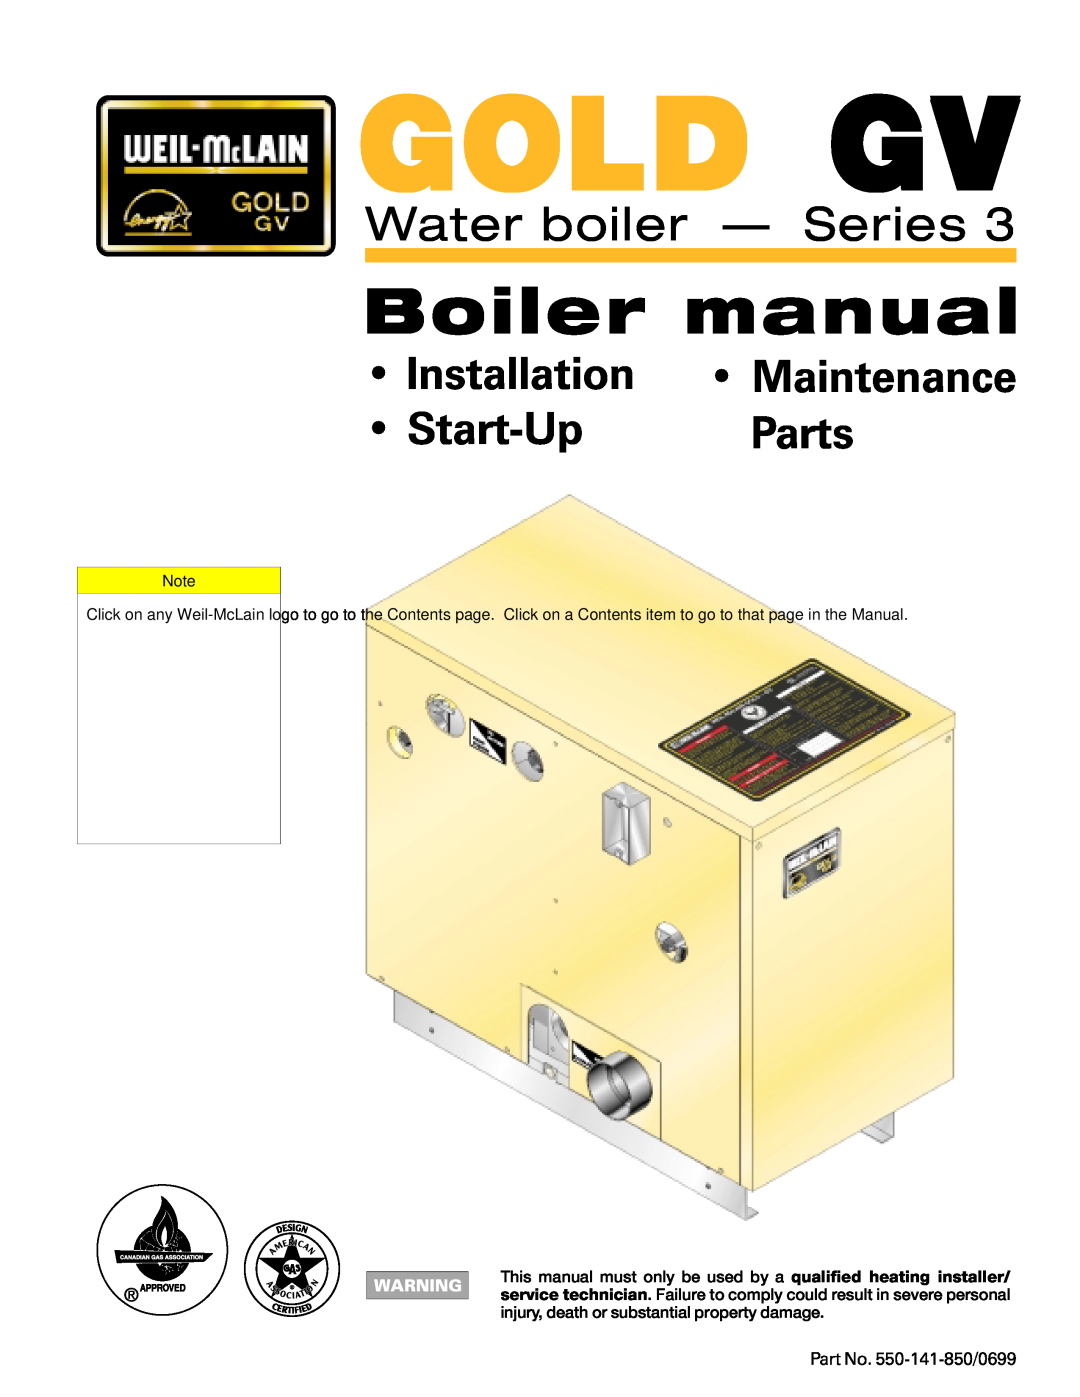 Weil-McLain 550-141-850/0599 manual Gold Gv, Boiler manual, Water boiler — Series, • Installation, • Maintenance, Parts 